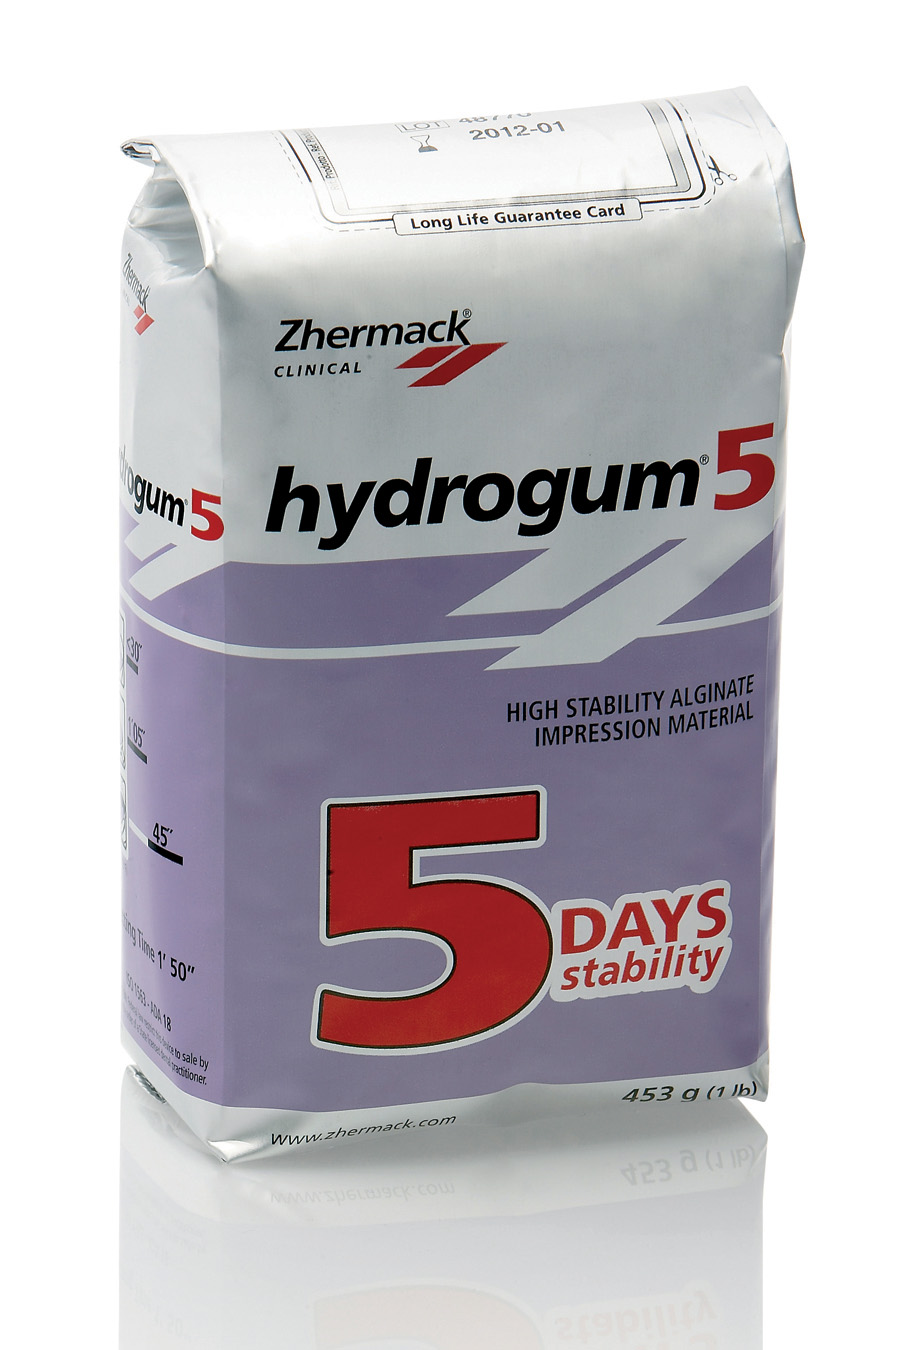 Zhermack-Hydrogum-5-1Lb-Bag